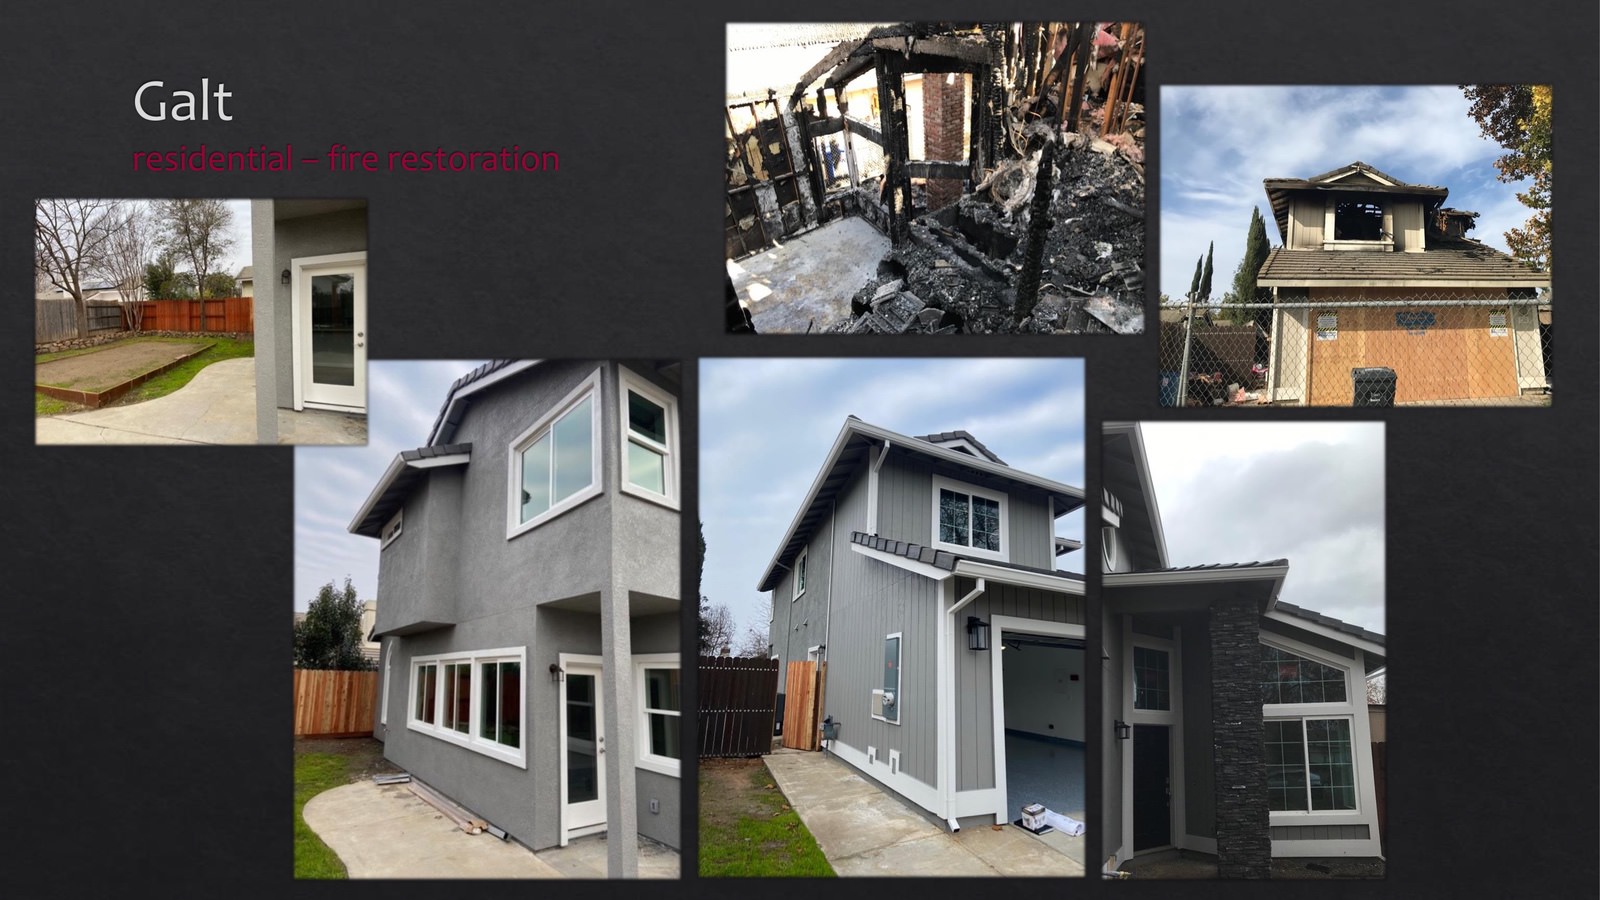 Galt Residential fire restoration - front + side of house